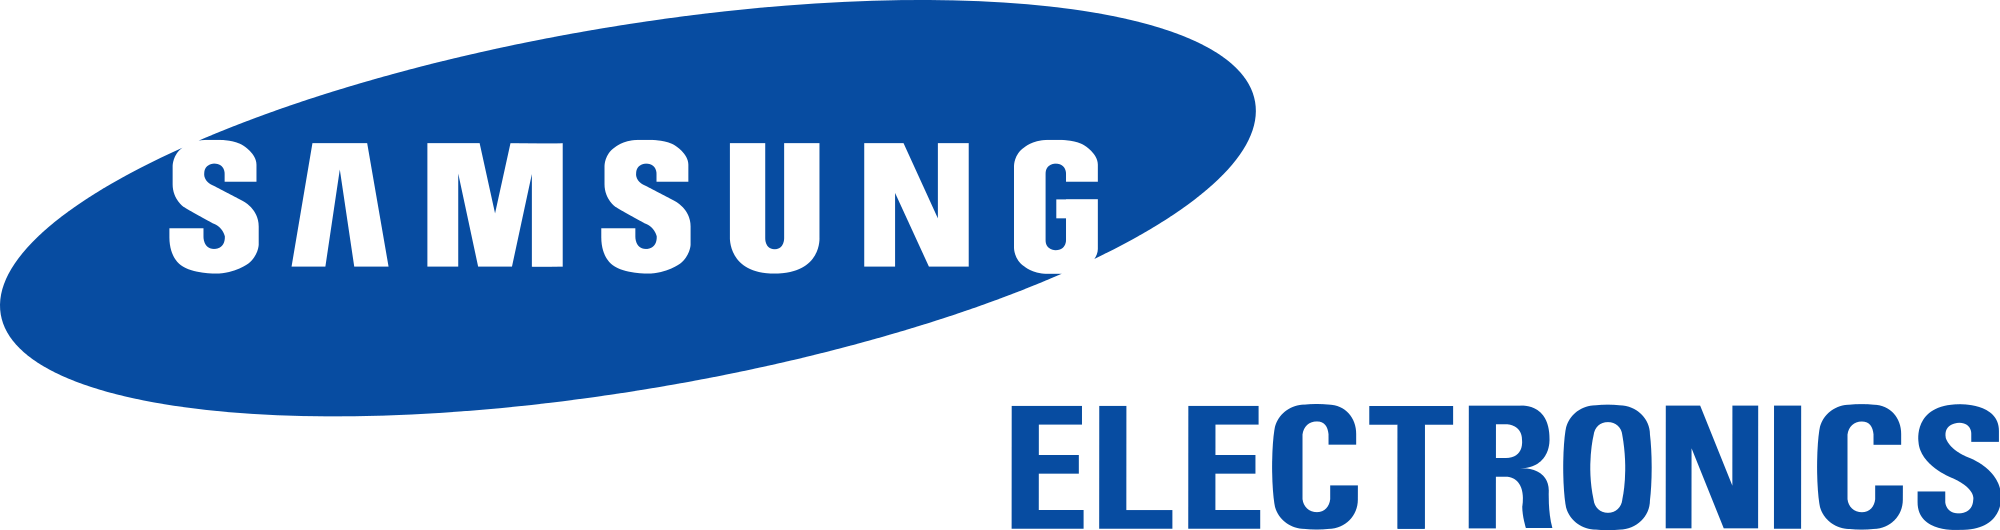 Samsung Electronics Logo - Samsung Electronics logo (english).svg